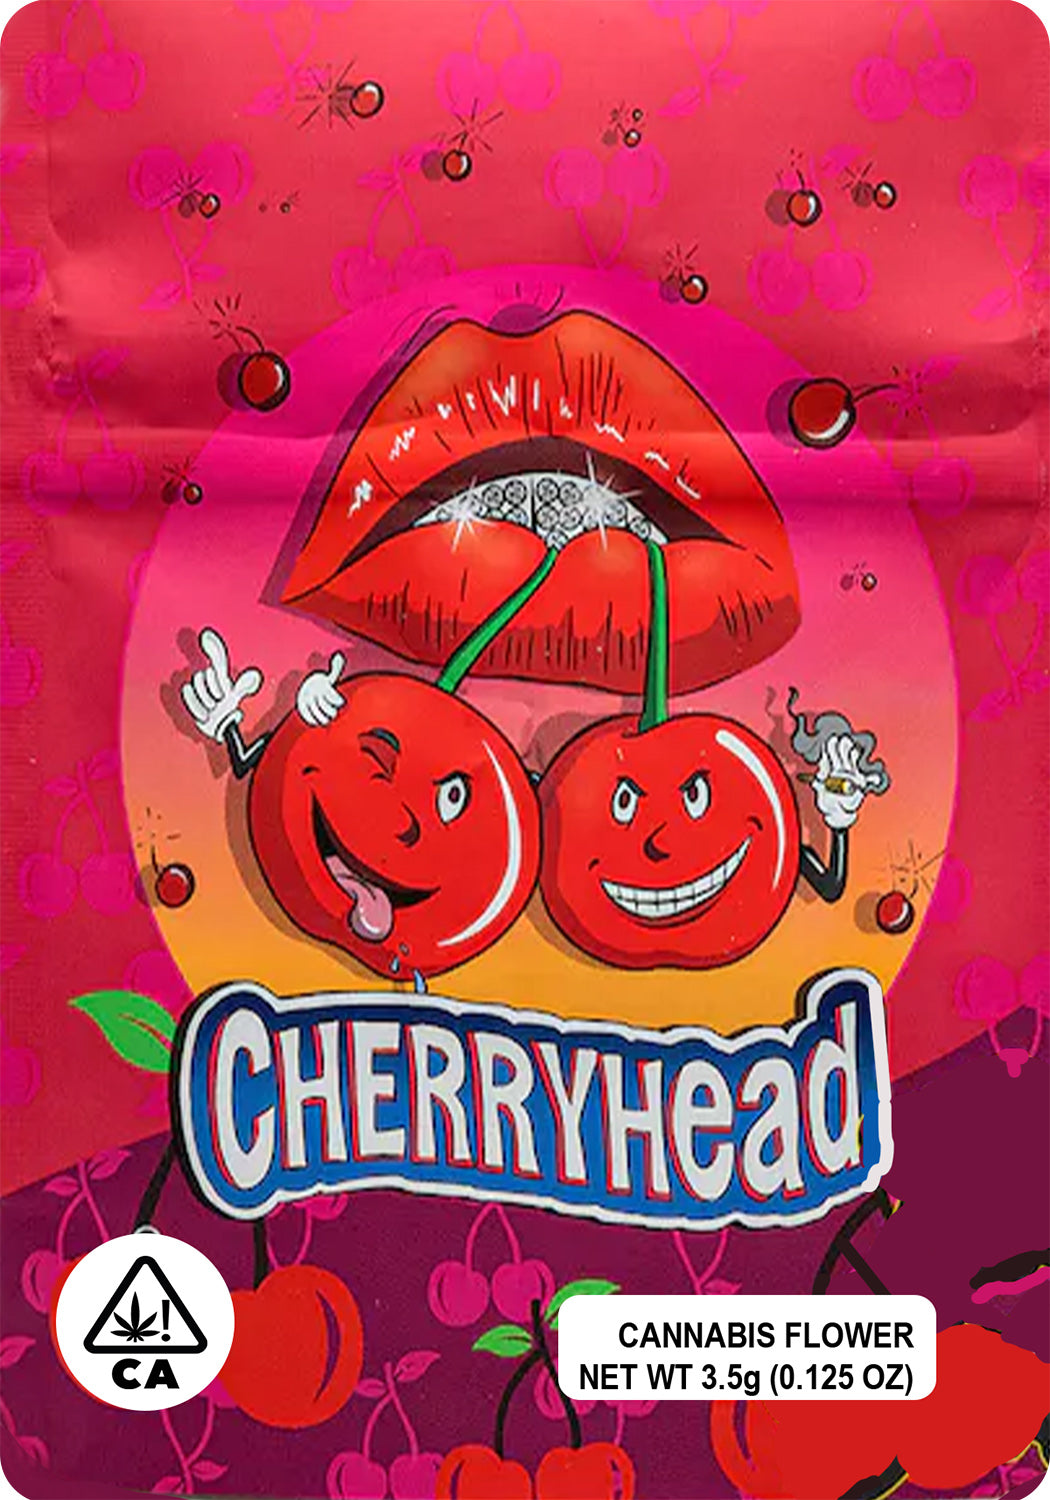 Cherryhead Mylar Bags 1g Gram 3.5g Eighth 7g Quarter 28g Oz Ounce 112g Quarter Pound Gooniez Teds Budz Sticker Bag Fire Mylar